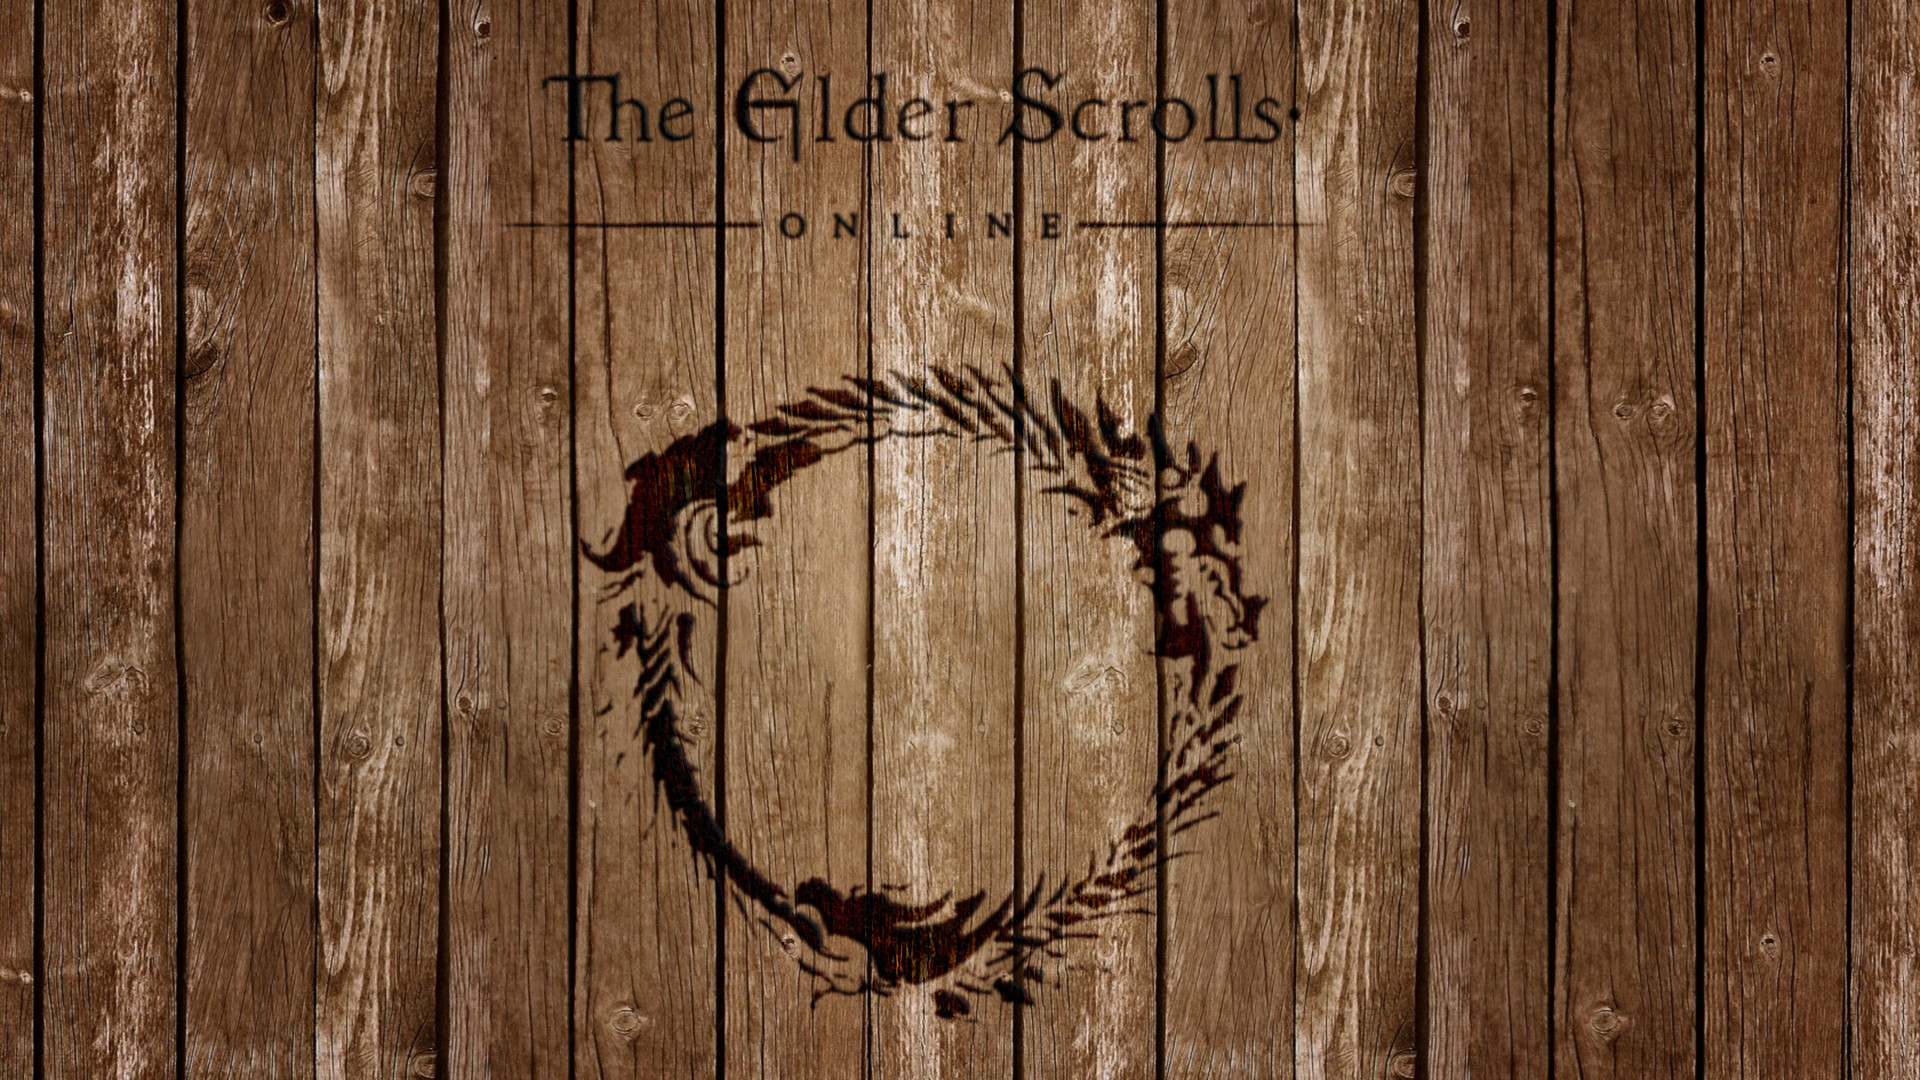 1920x1080 ... The Elder Scrolls Online Wallpaper ...